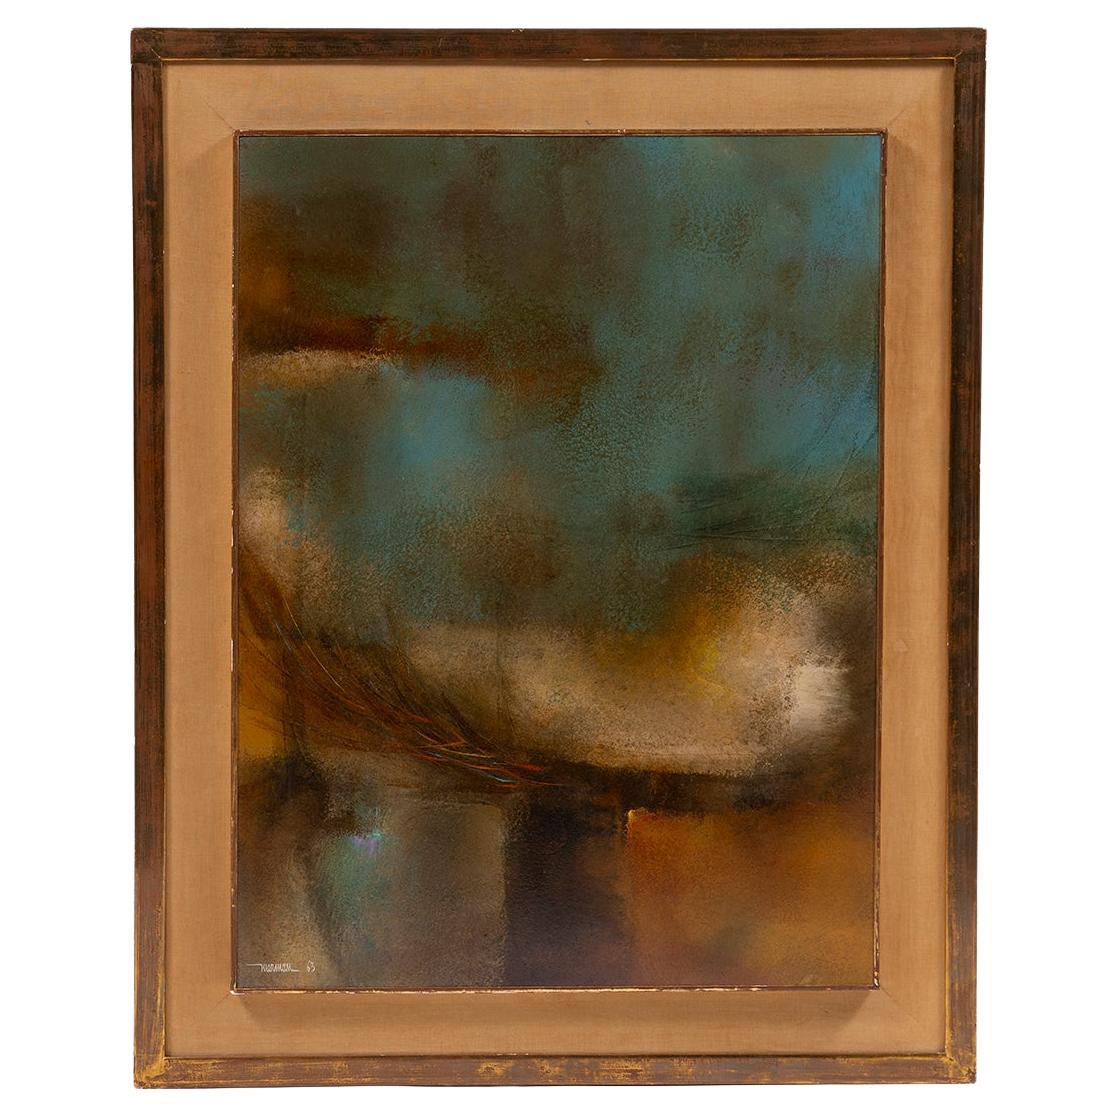 Leonardo Nierman 1963 - Peinture à l'huile abstraite